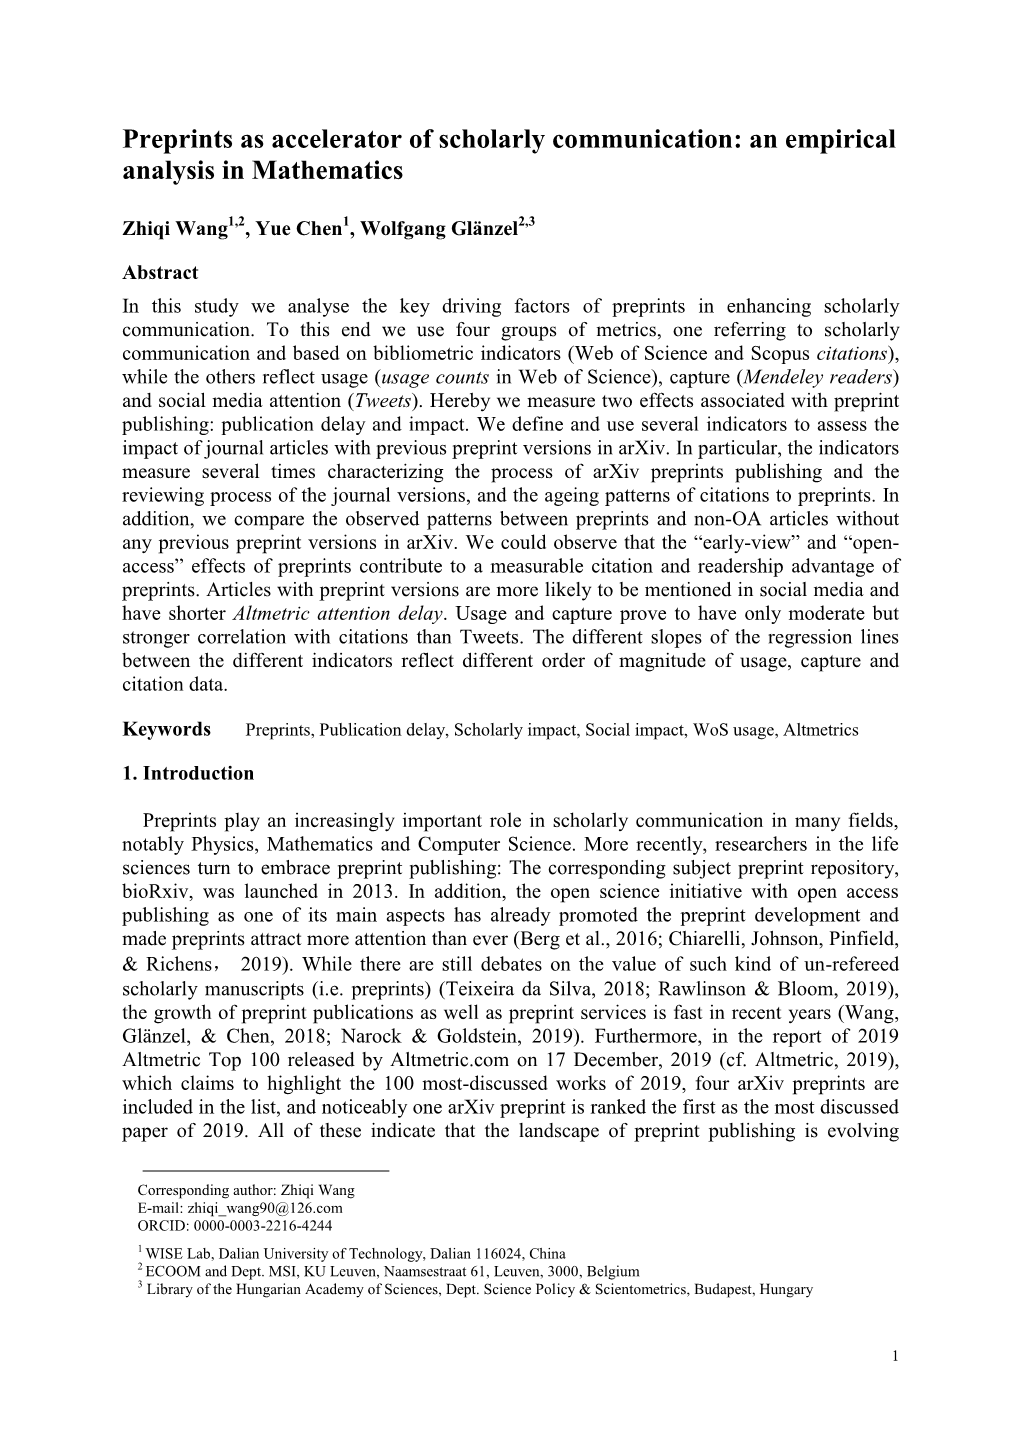 Preprints As Accelerator of Scholarly Communication: an Empirical Analysis in Mathematics